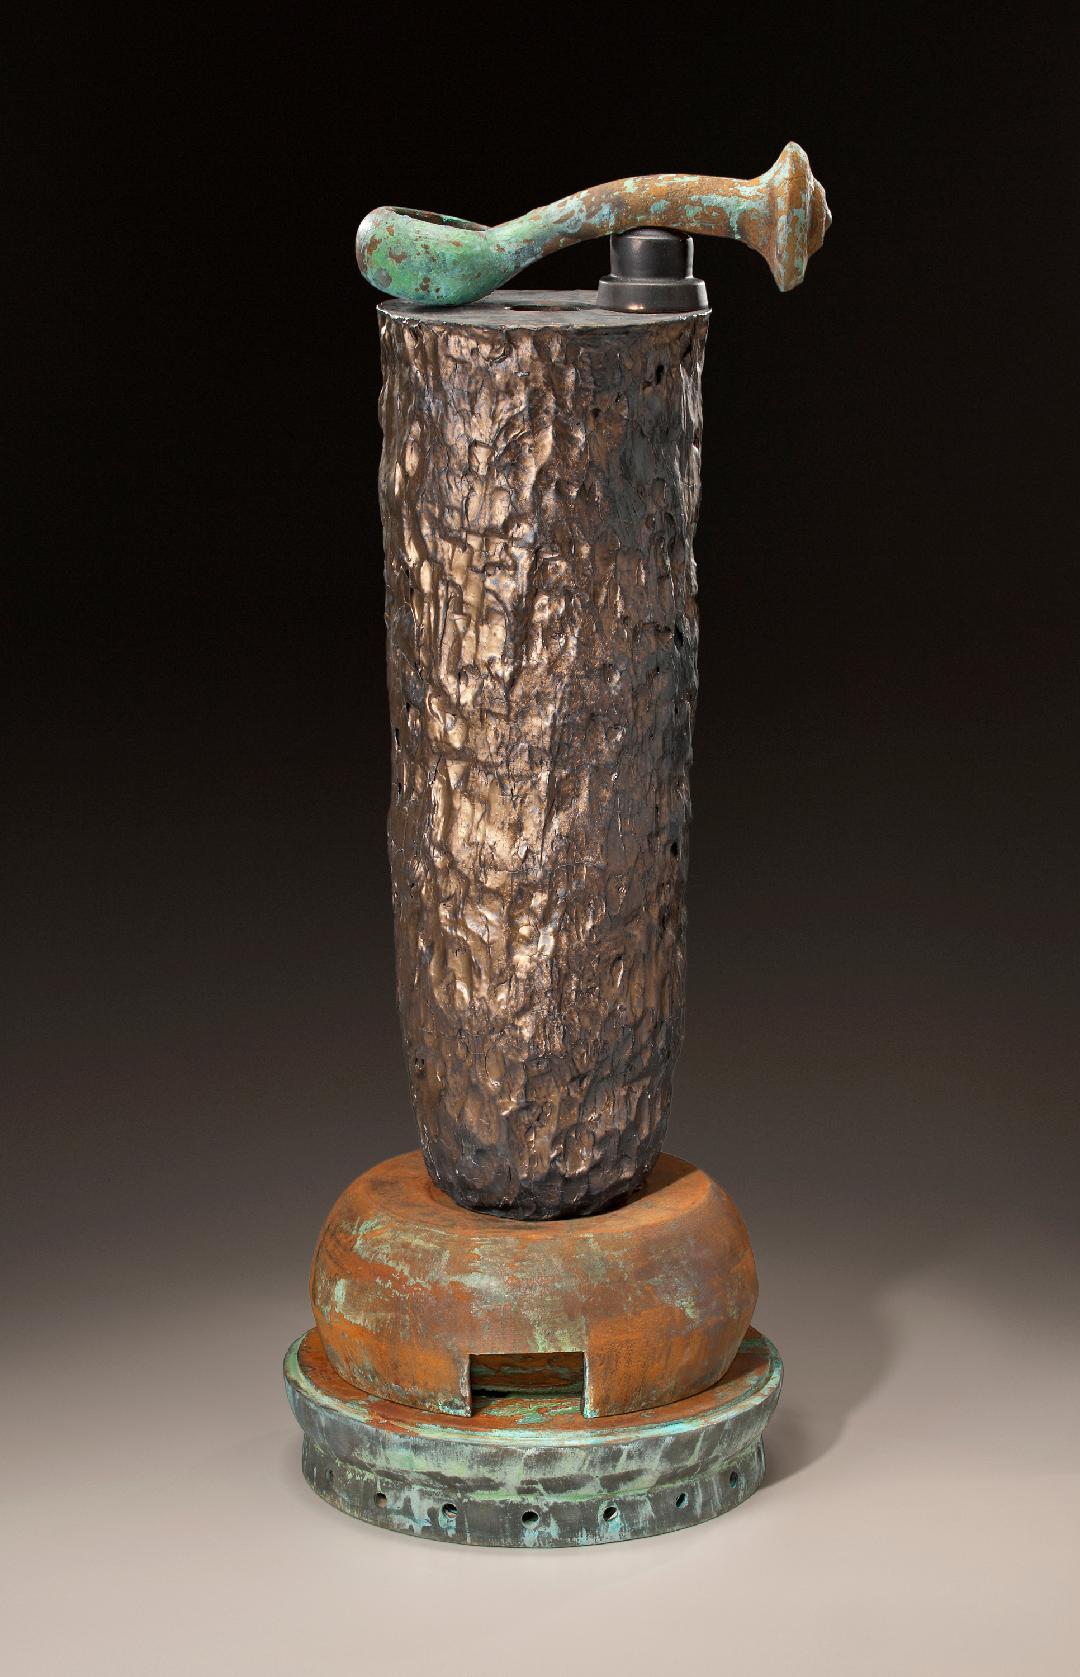 Contemporary Richard Hirsch Glazed Ceramic Crucible Sculpture #25, 2011 For Sale